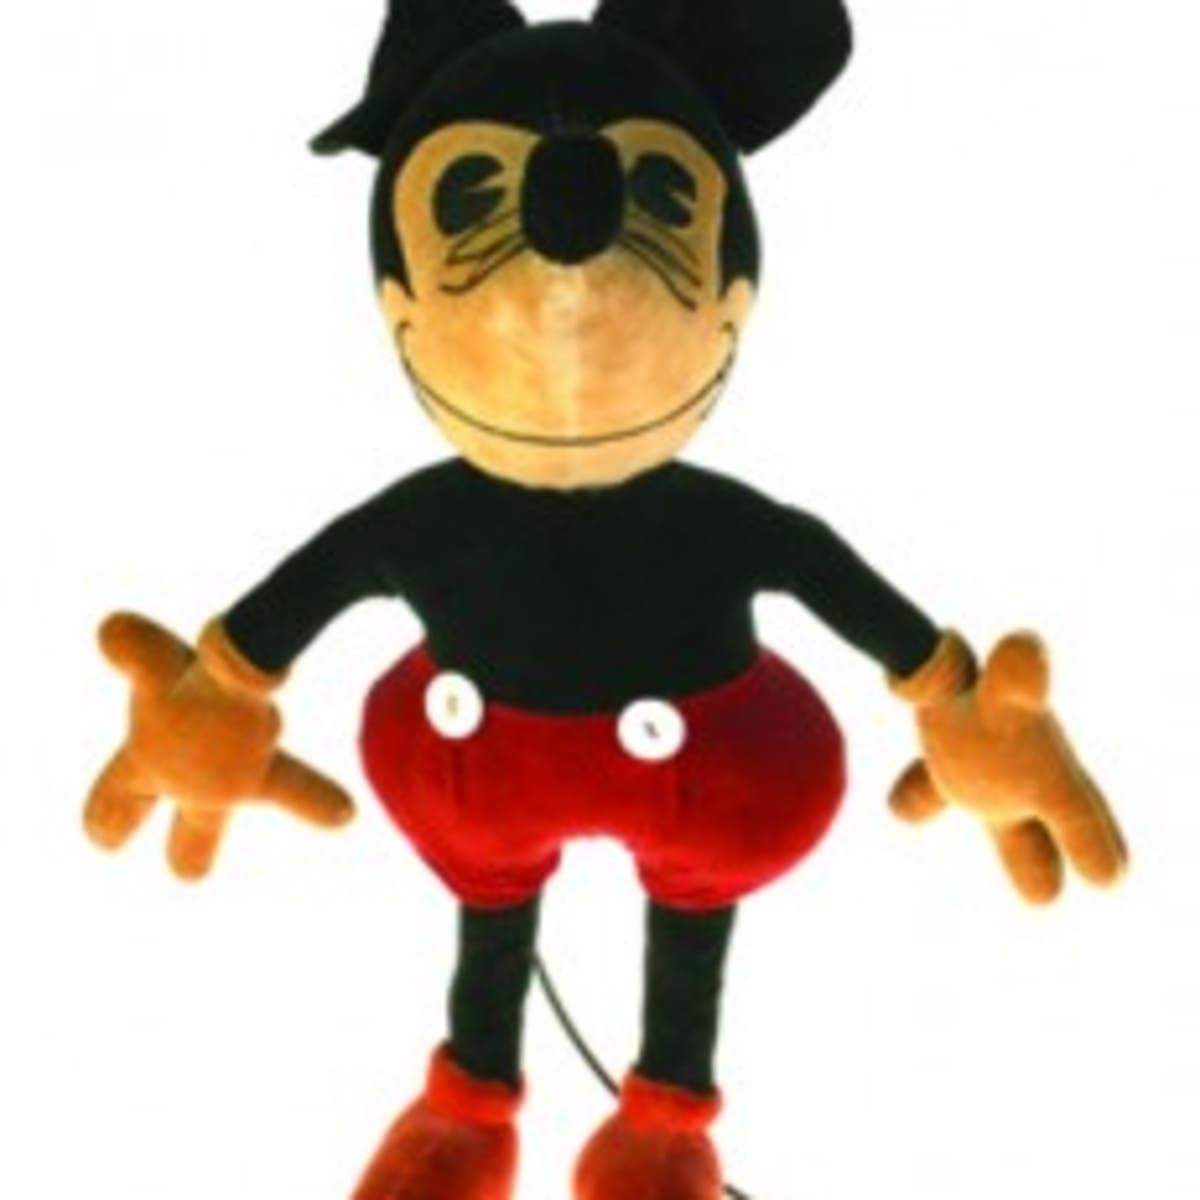 original mickey mouse plush